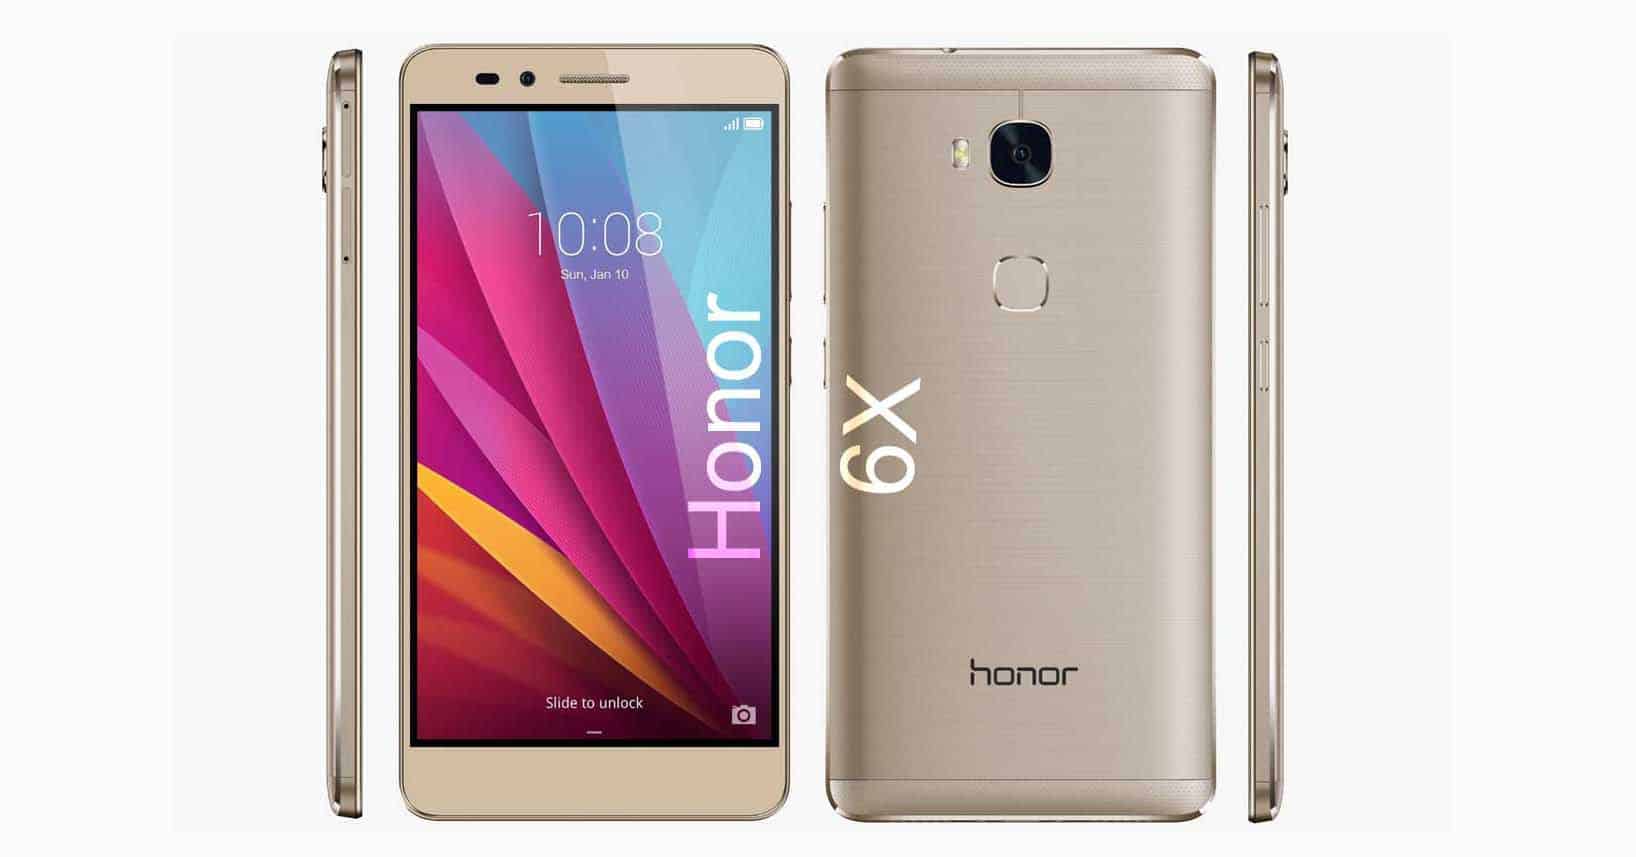 Huawei Honor 6X specs